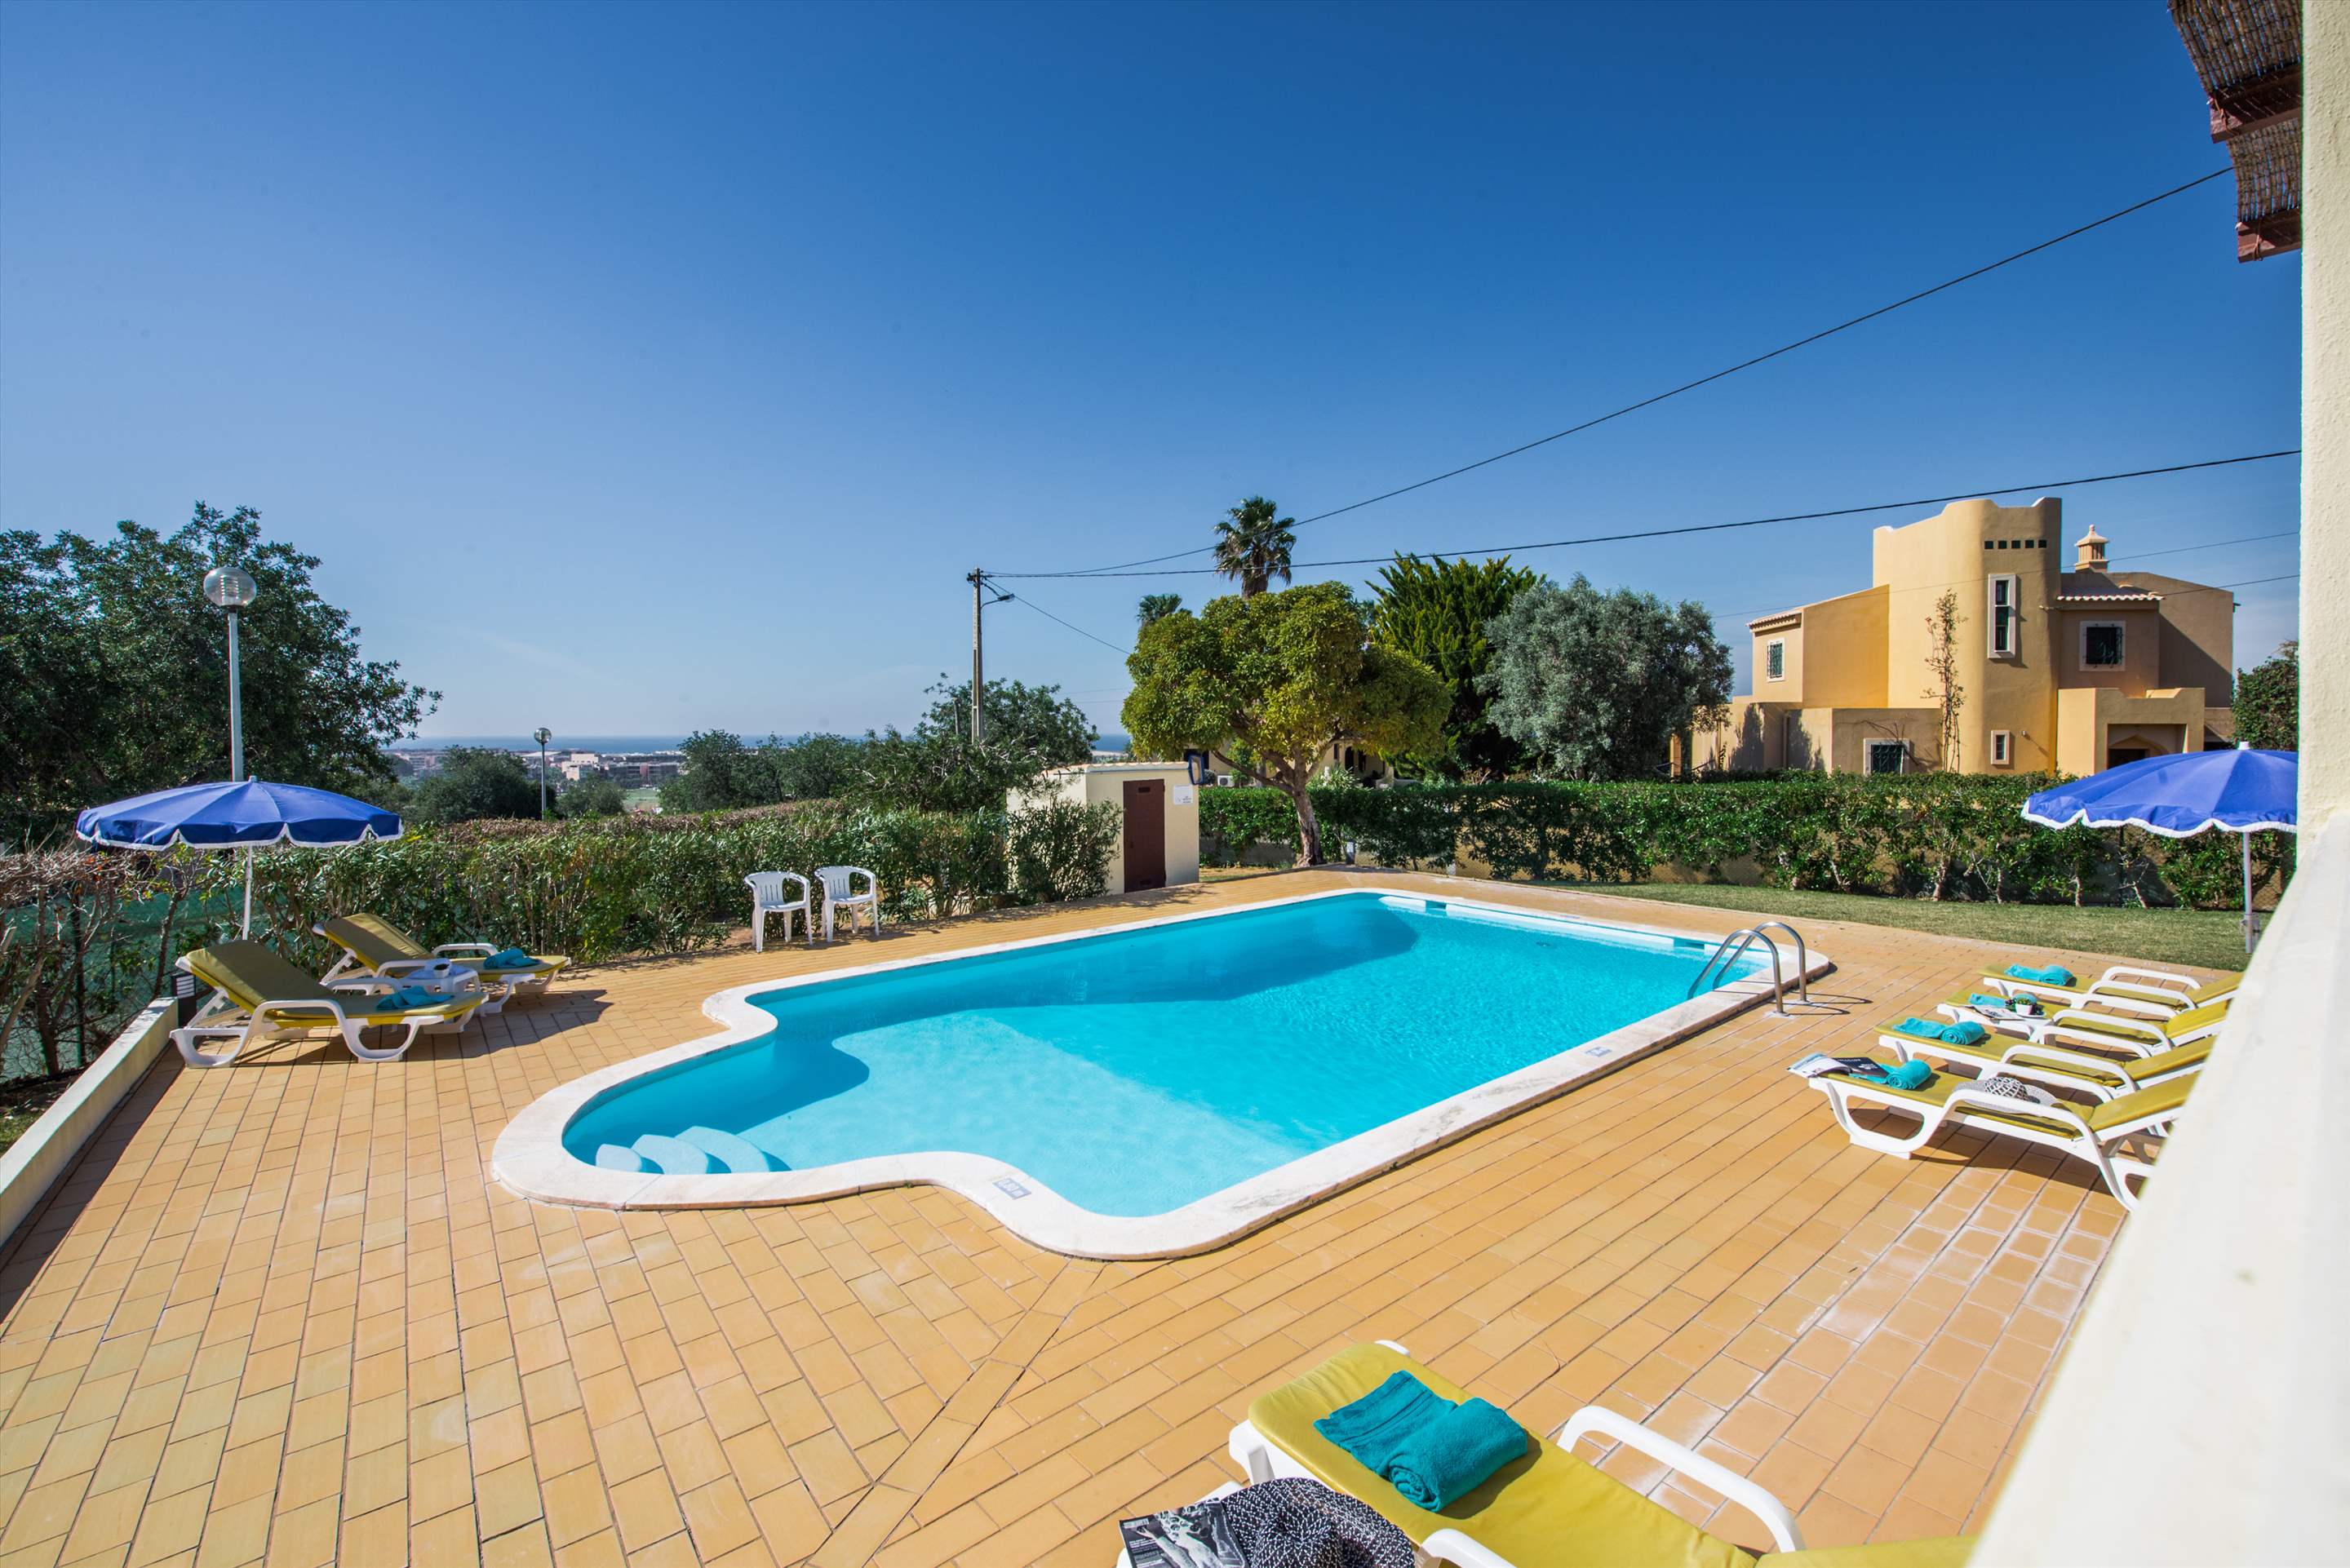 Villa Amendoeira, 7 to 8 persons rate, 4 bedroom villa in Gale, Vale da Parra and Guia, Algarve Photo #12